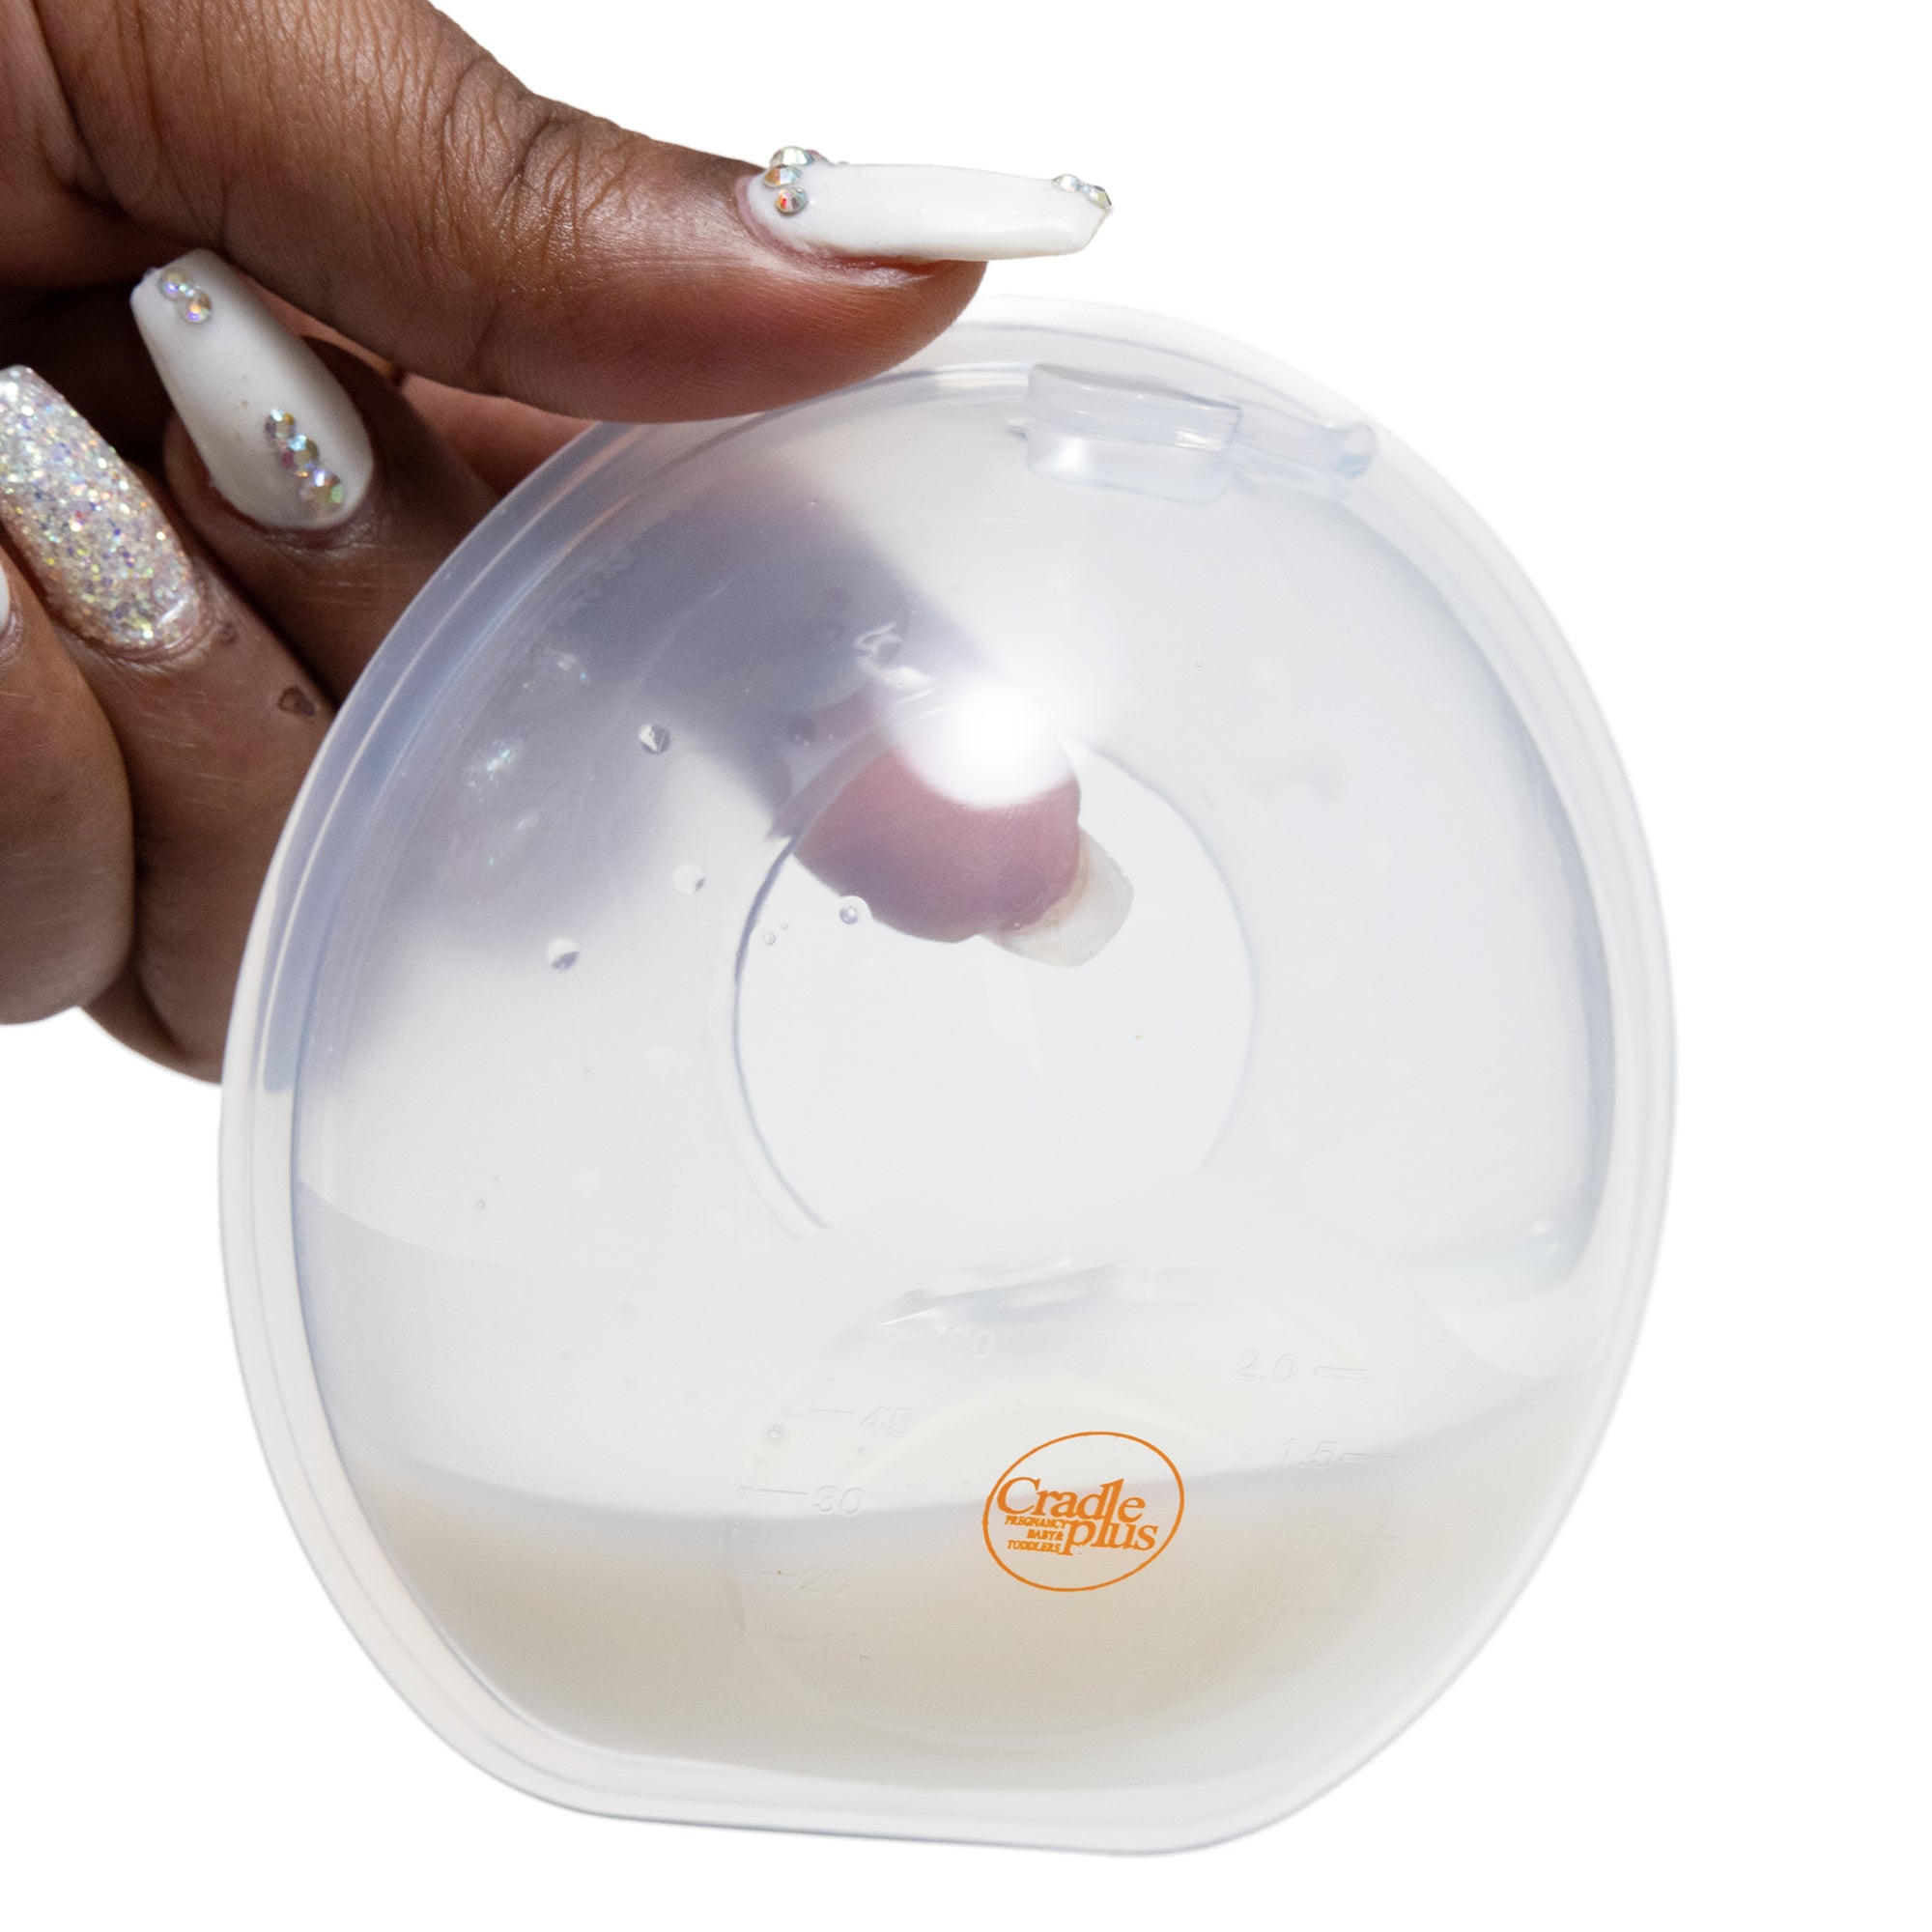 Cradle Plus Nipple Shield & Milk Collector for Breastmilk – W/ Breast  Nipple Protector